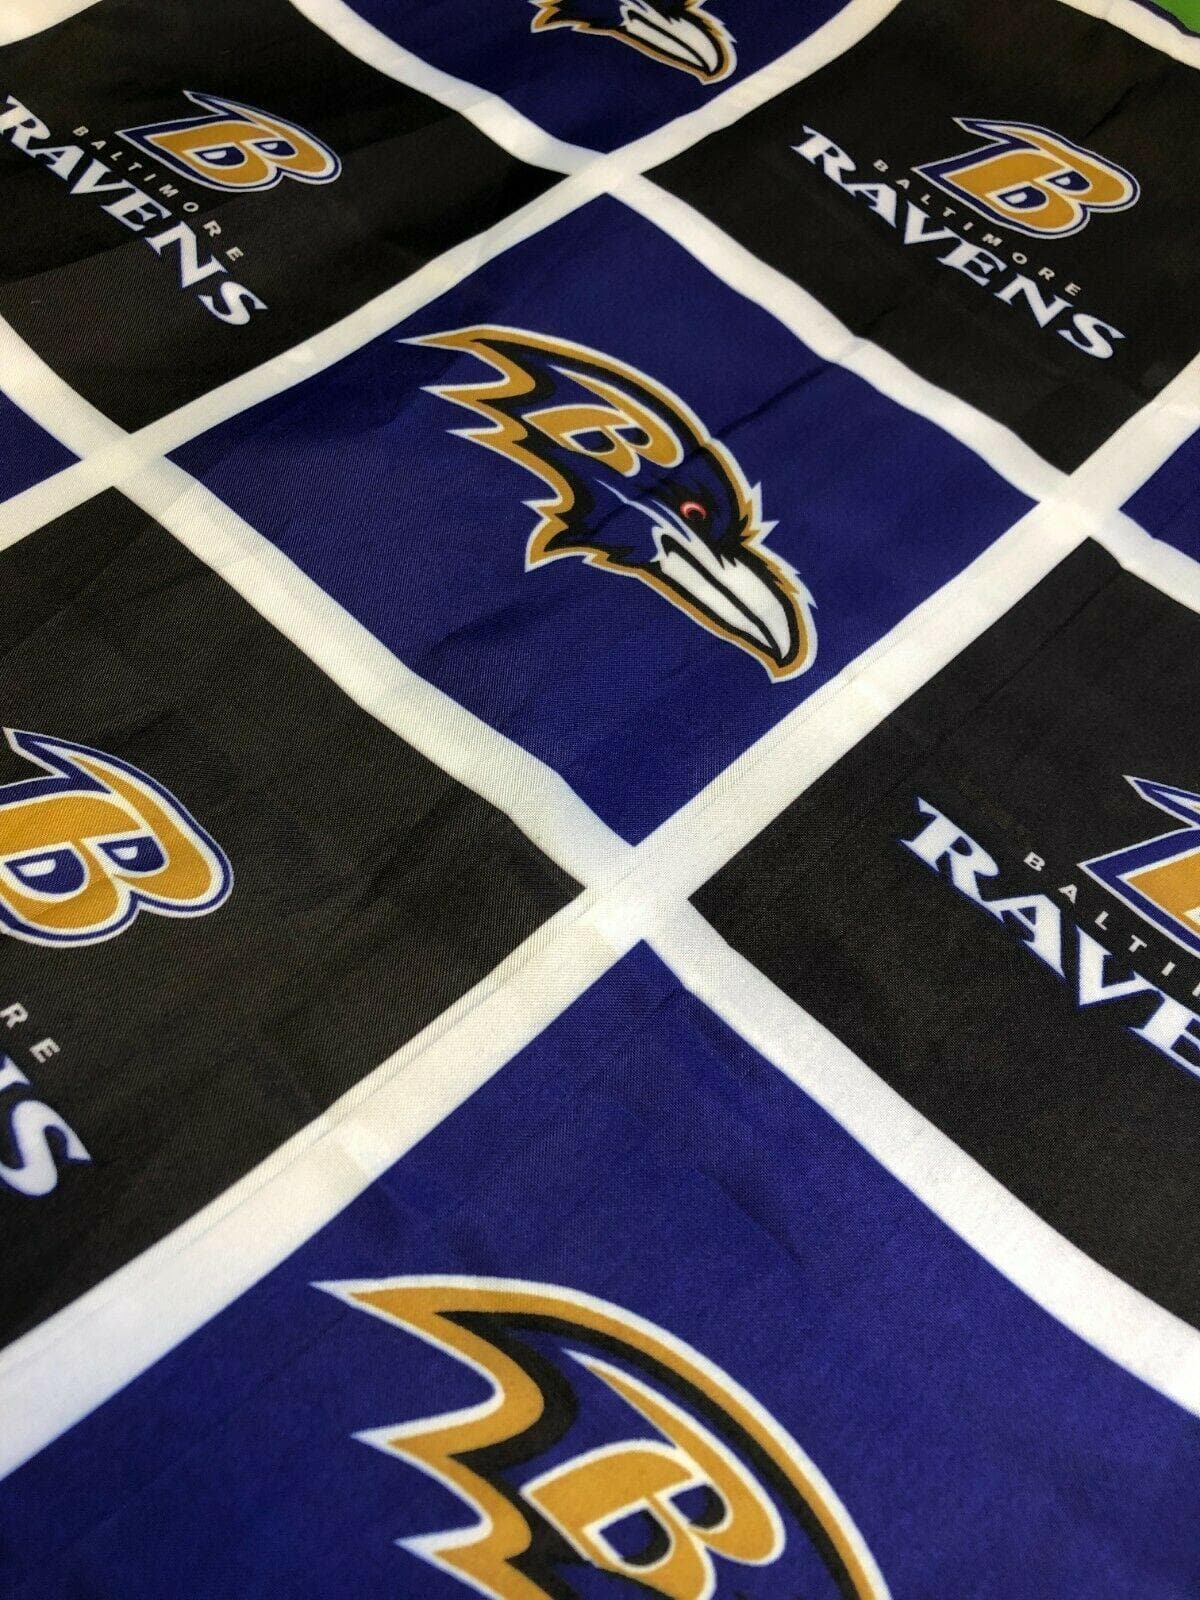 NFL Baltimore Ravens Shower Curtain 70" x 72" Brilliant!